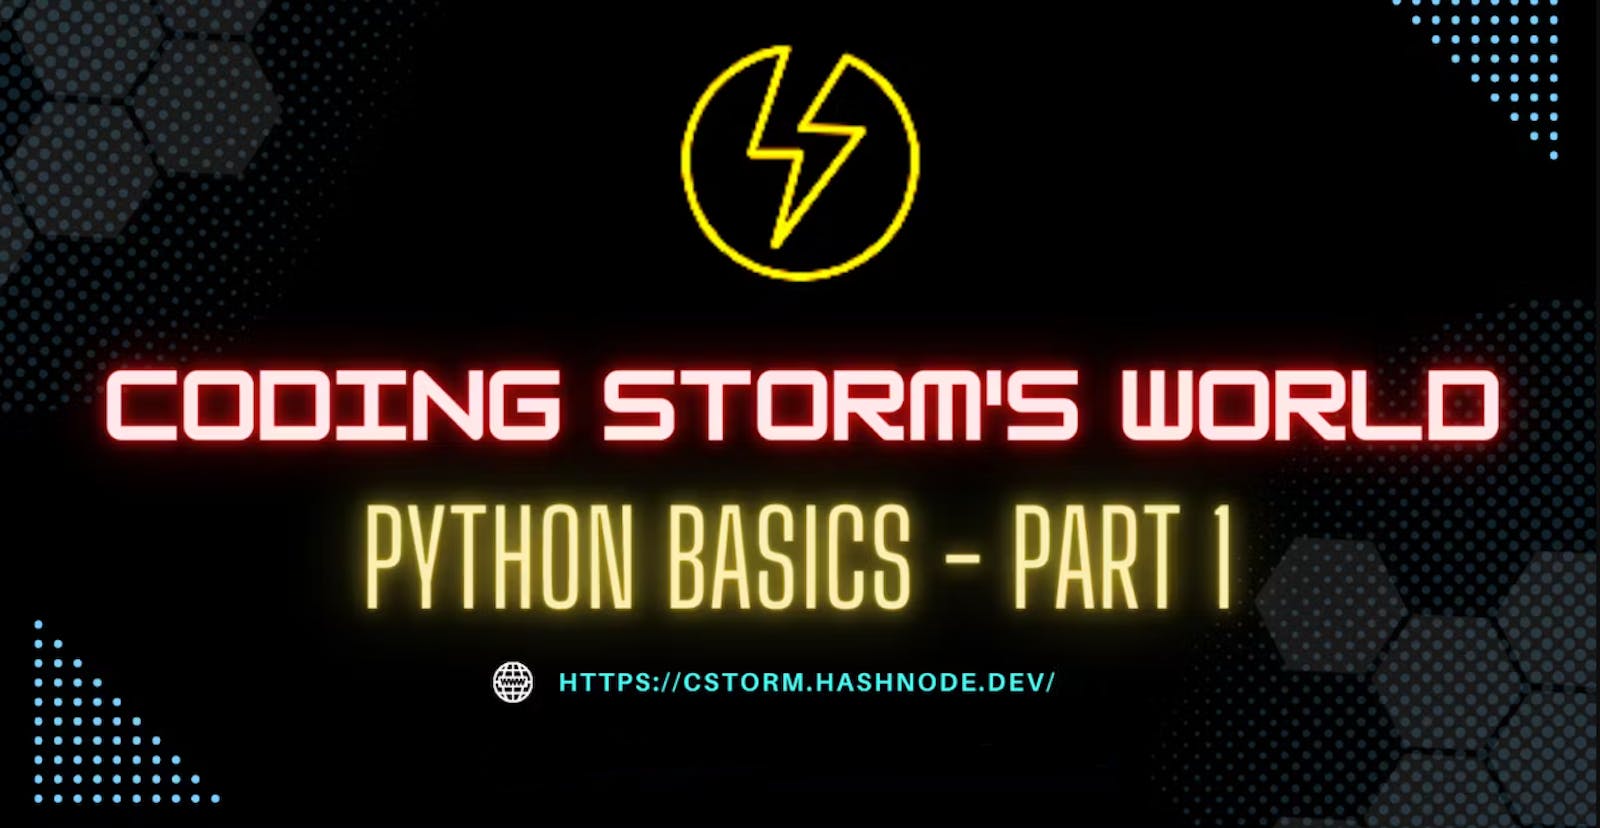 Python Basics - Part 1